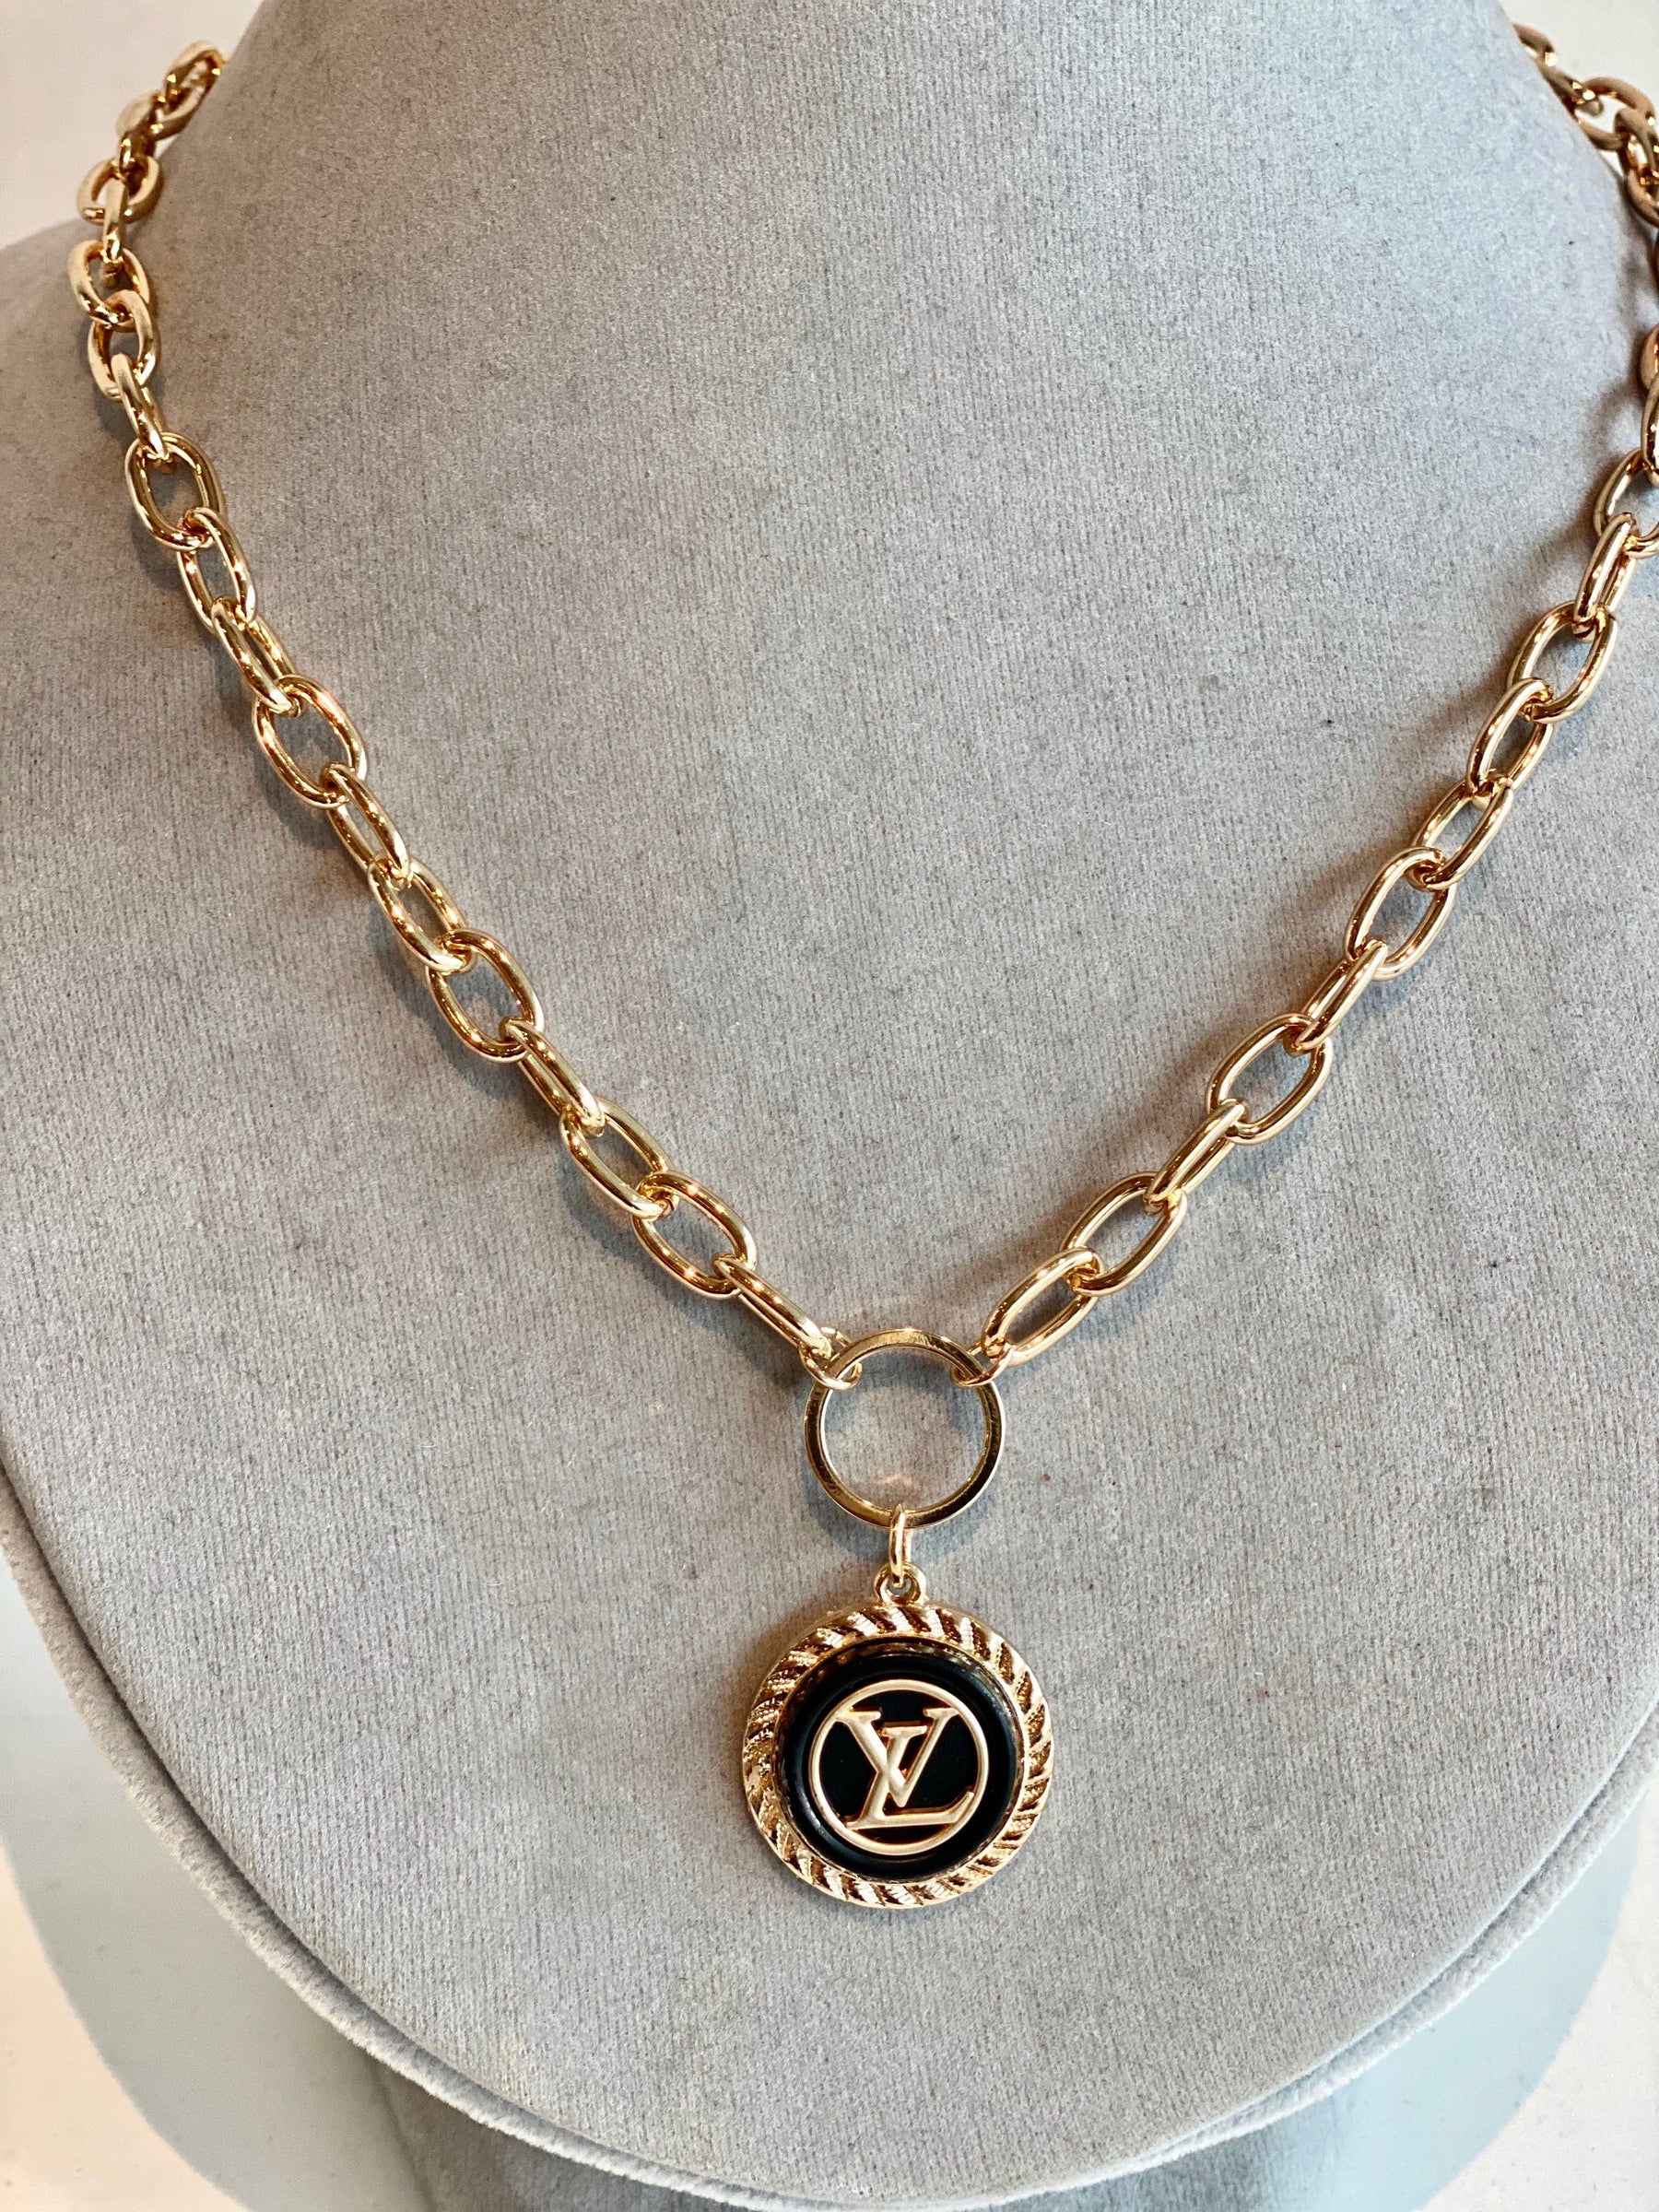 LV gold button necklace